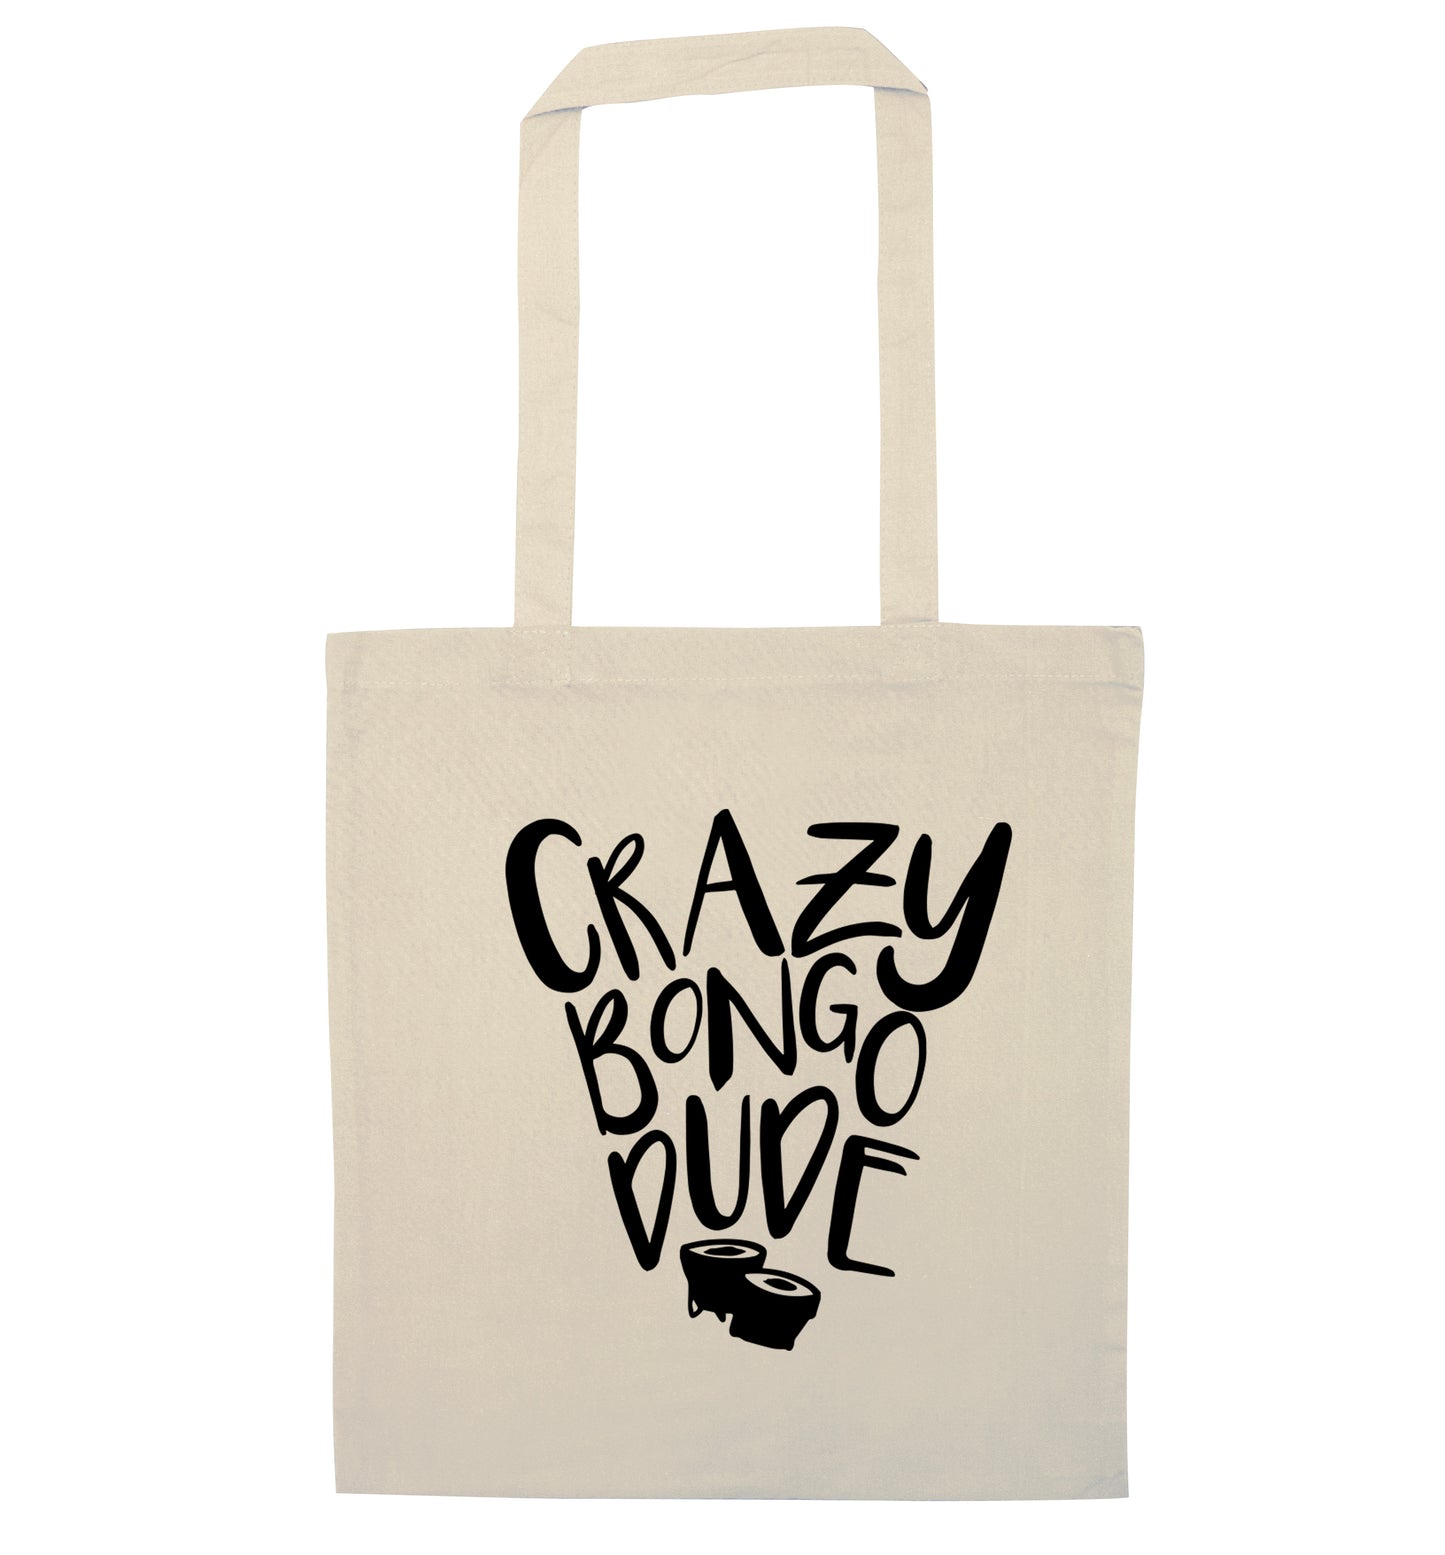 Crazy bongo dude natural tote bag